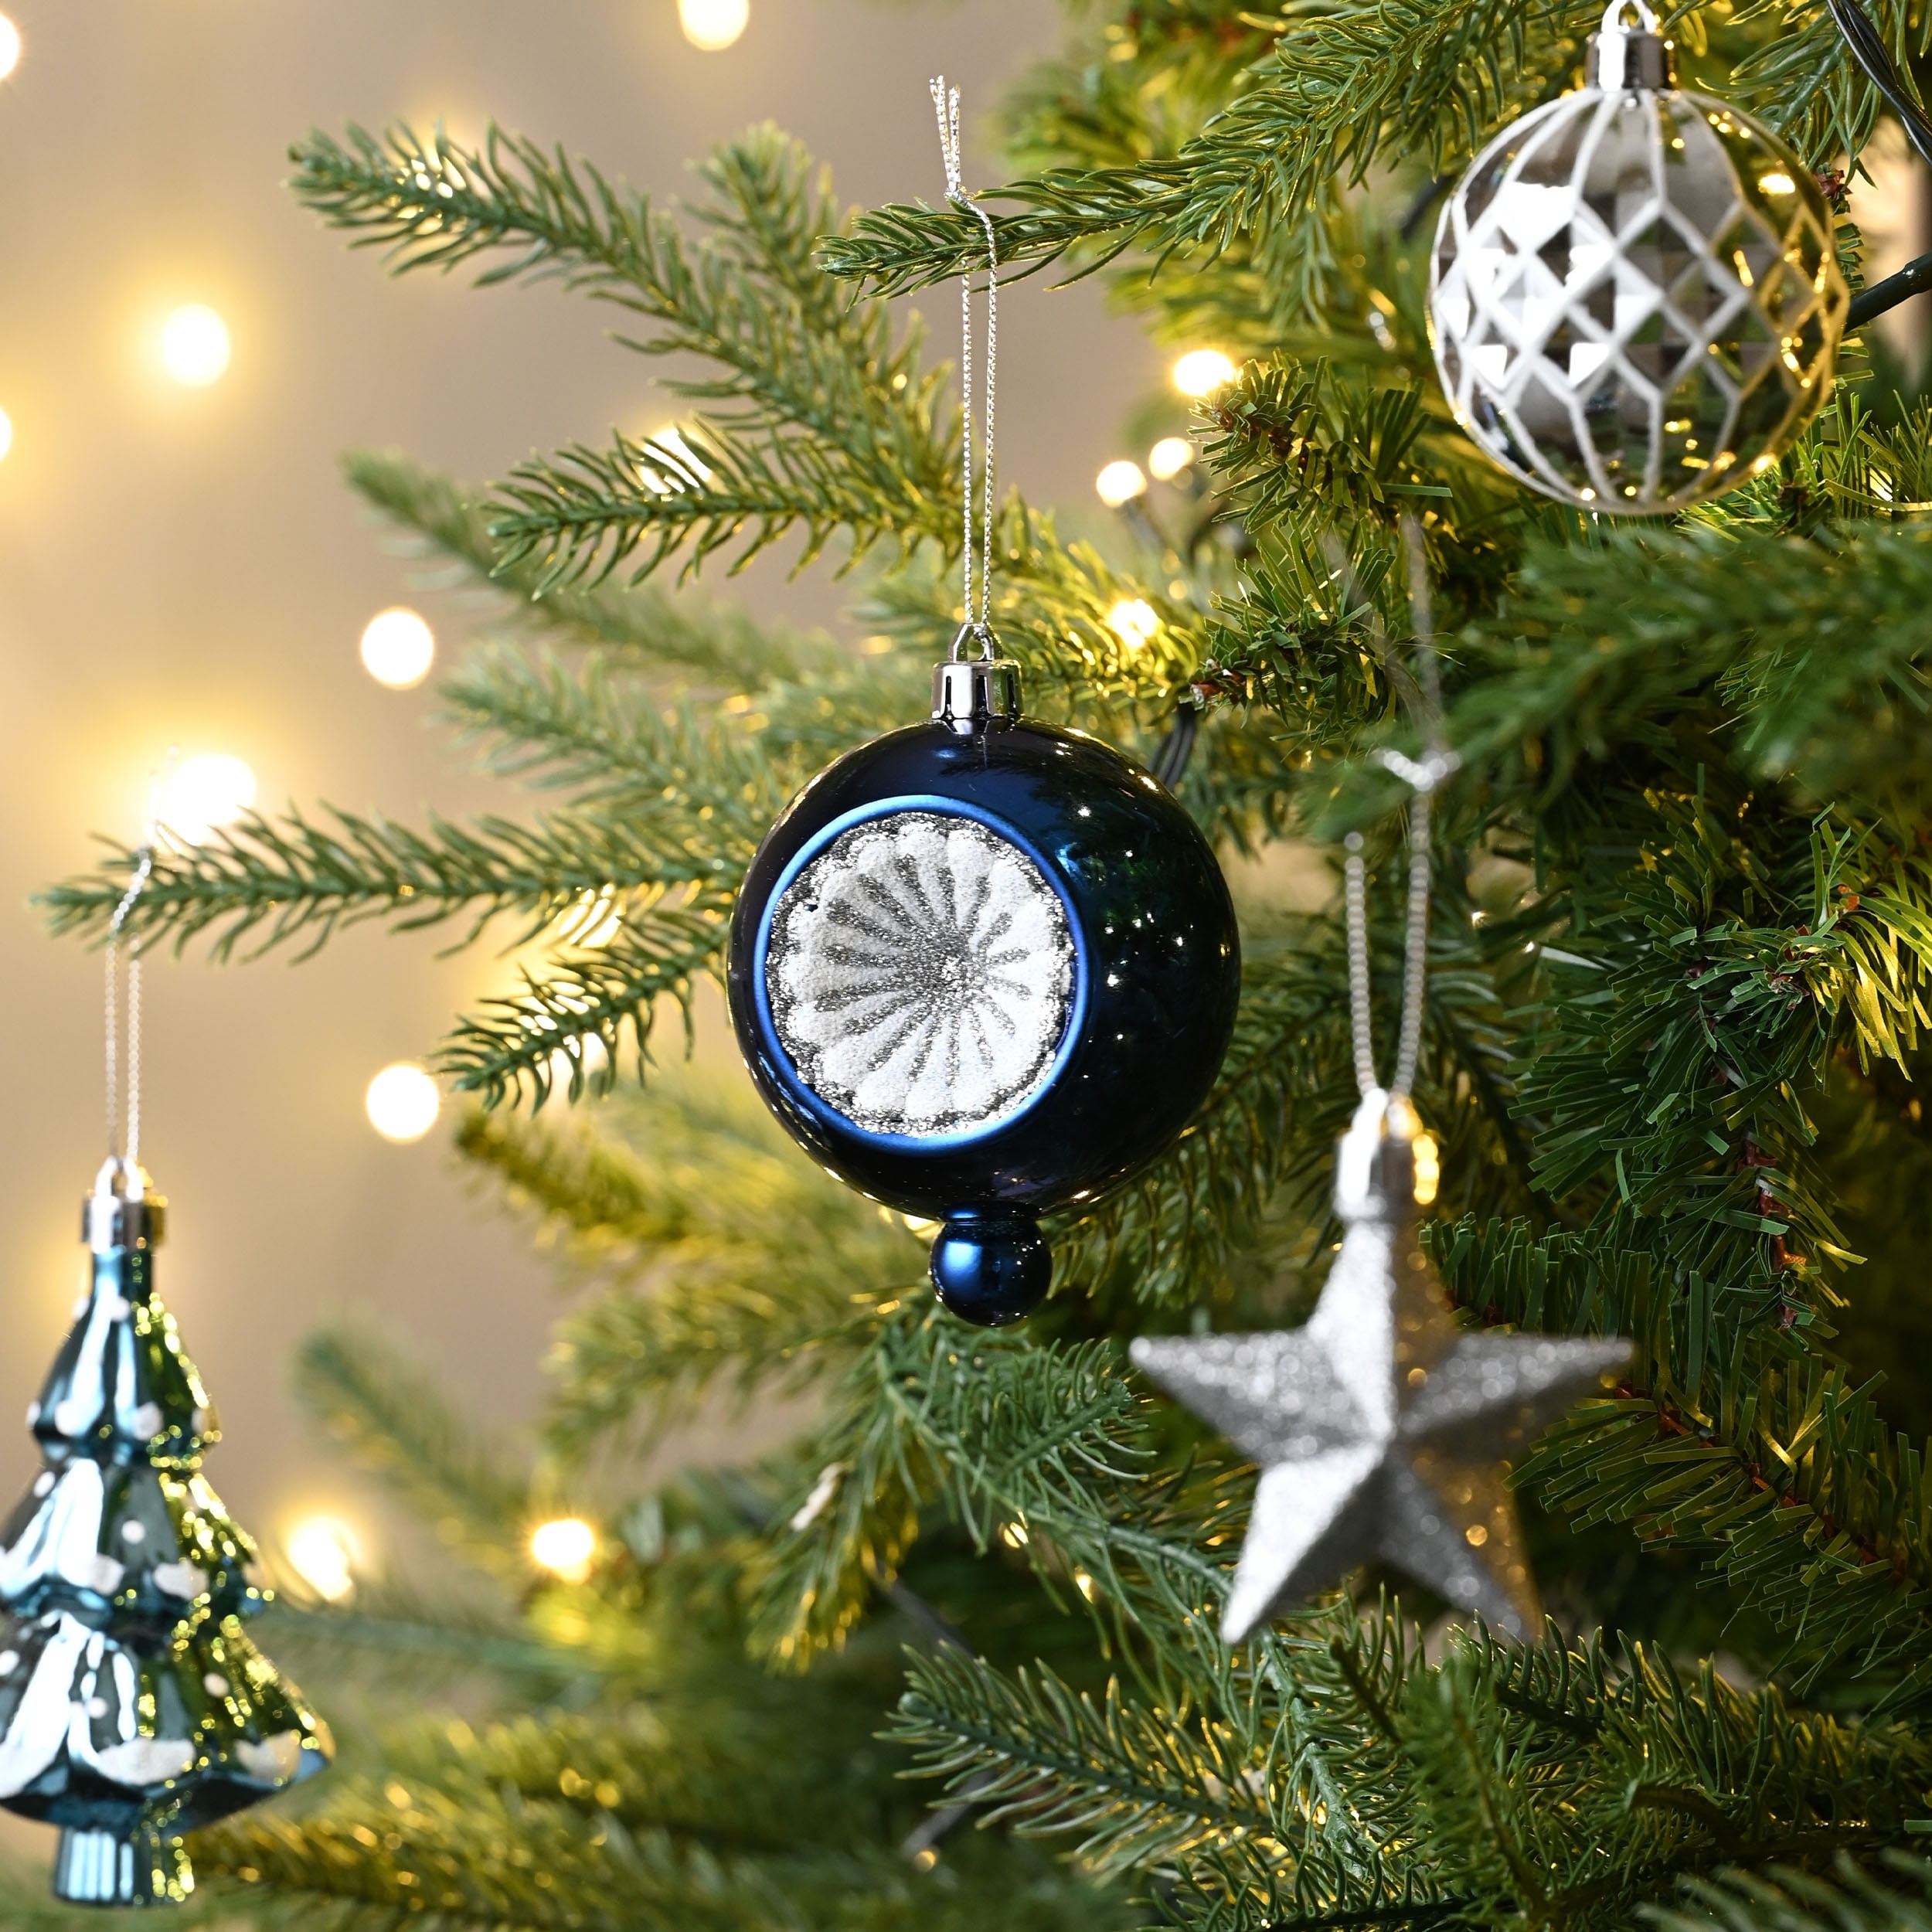 NOLITOY 100pcs Christmas Sleigh Bells Christmas Bells Wreath Decor Small  Bells Bulk Christmas Tree Ornaments Tree Decoration Ball Holiday Party